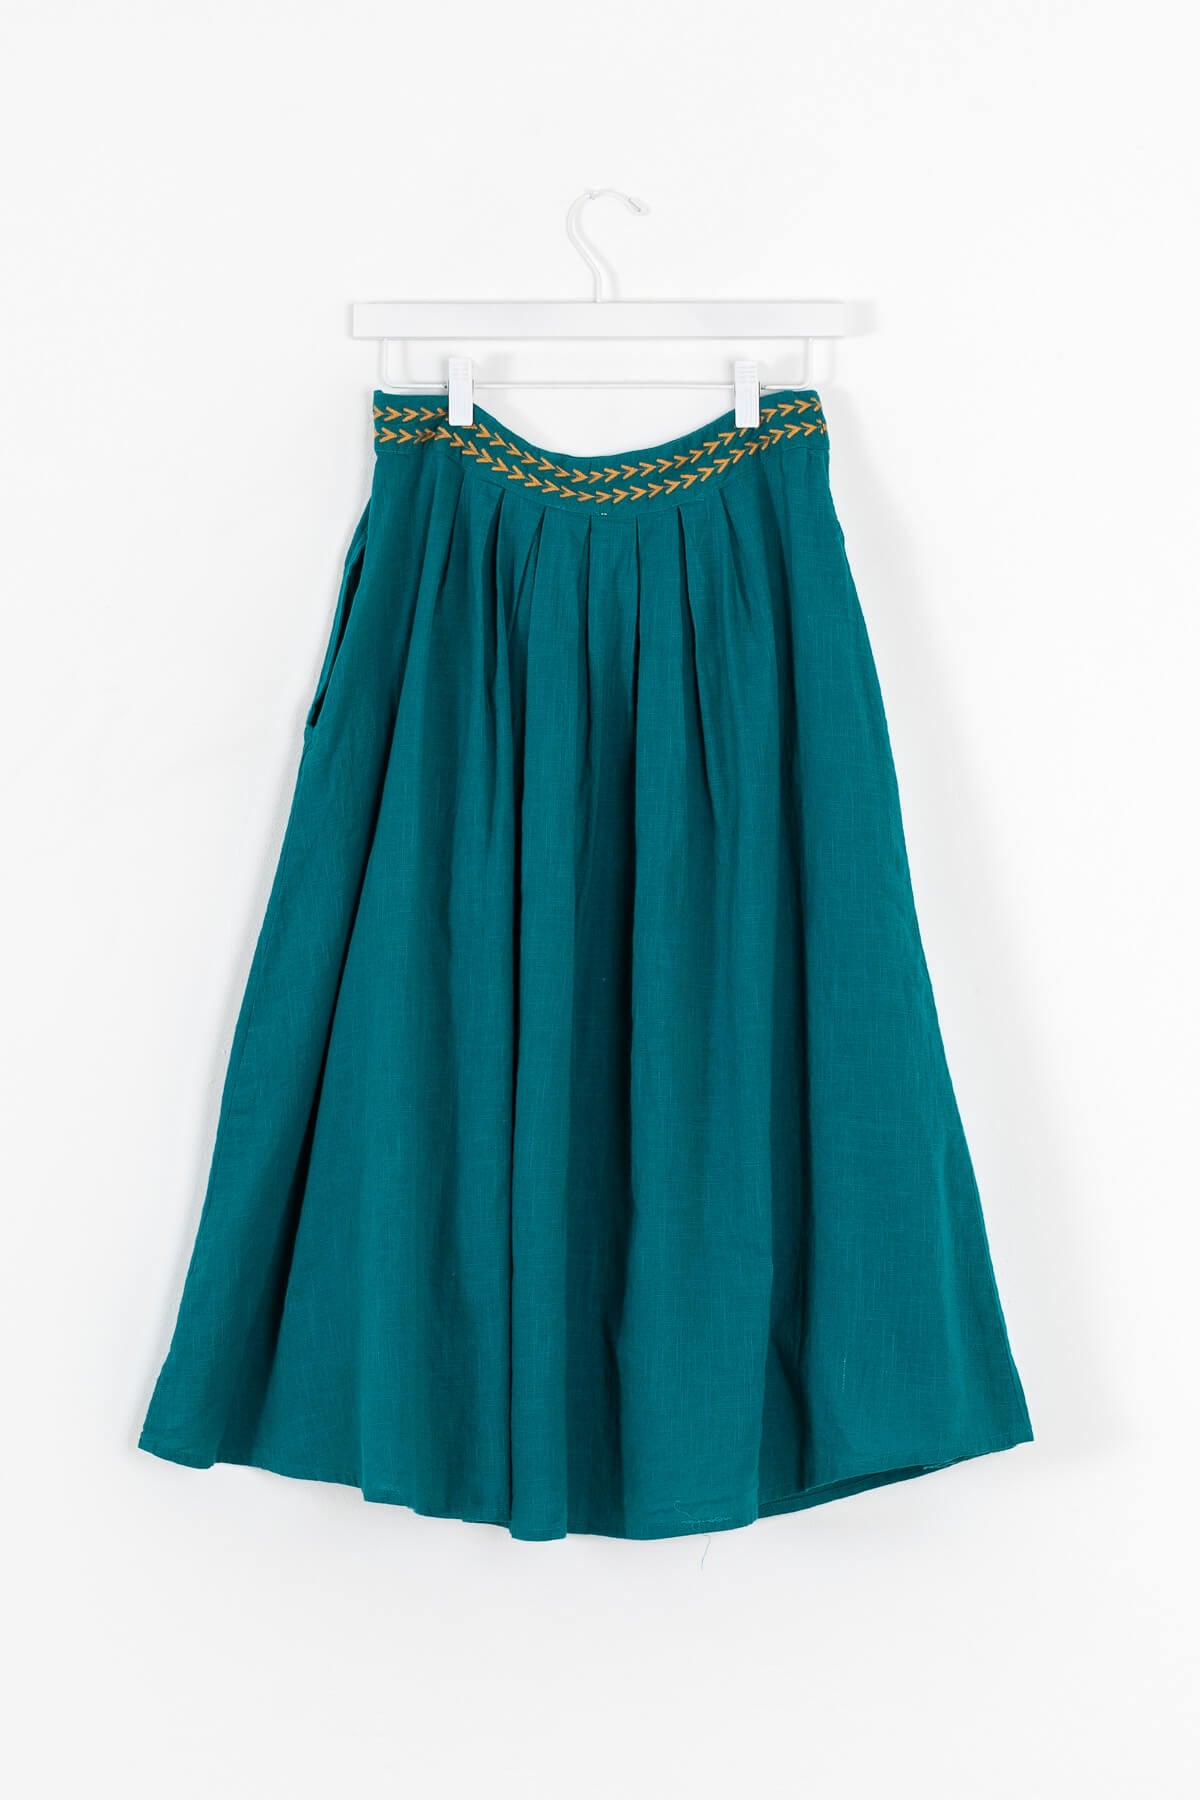 Women's teal boho midi skirt | Kariella